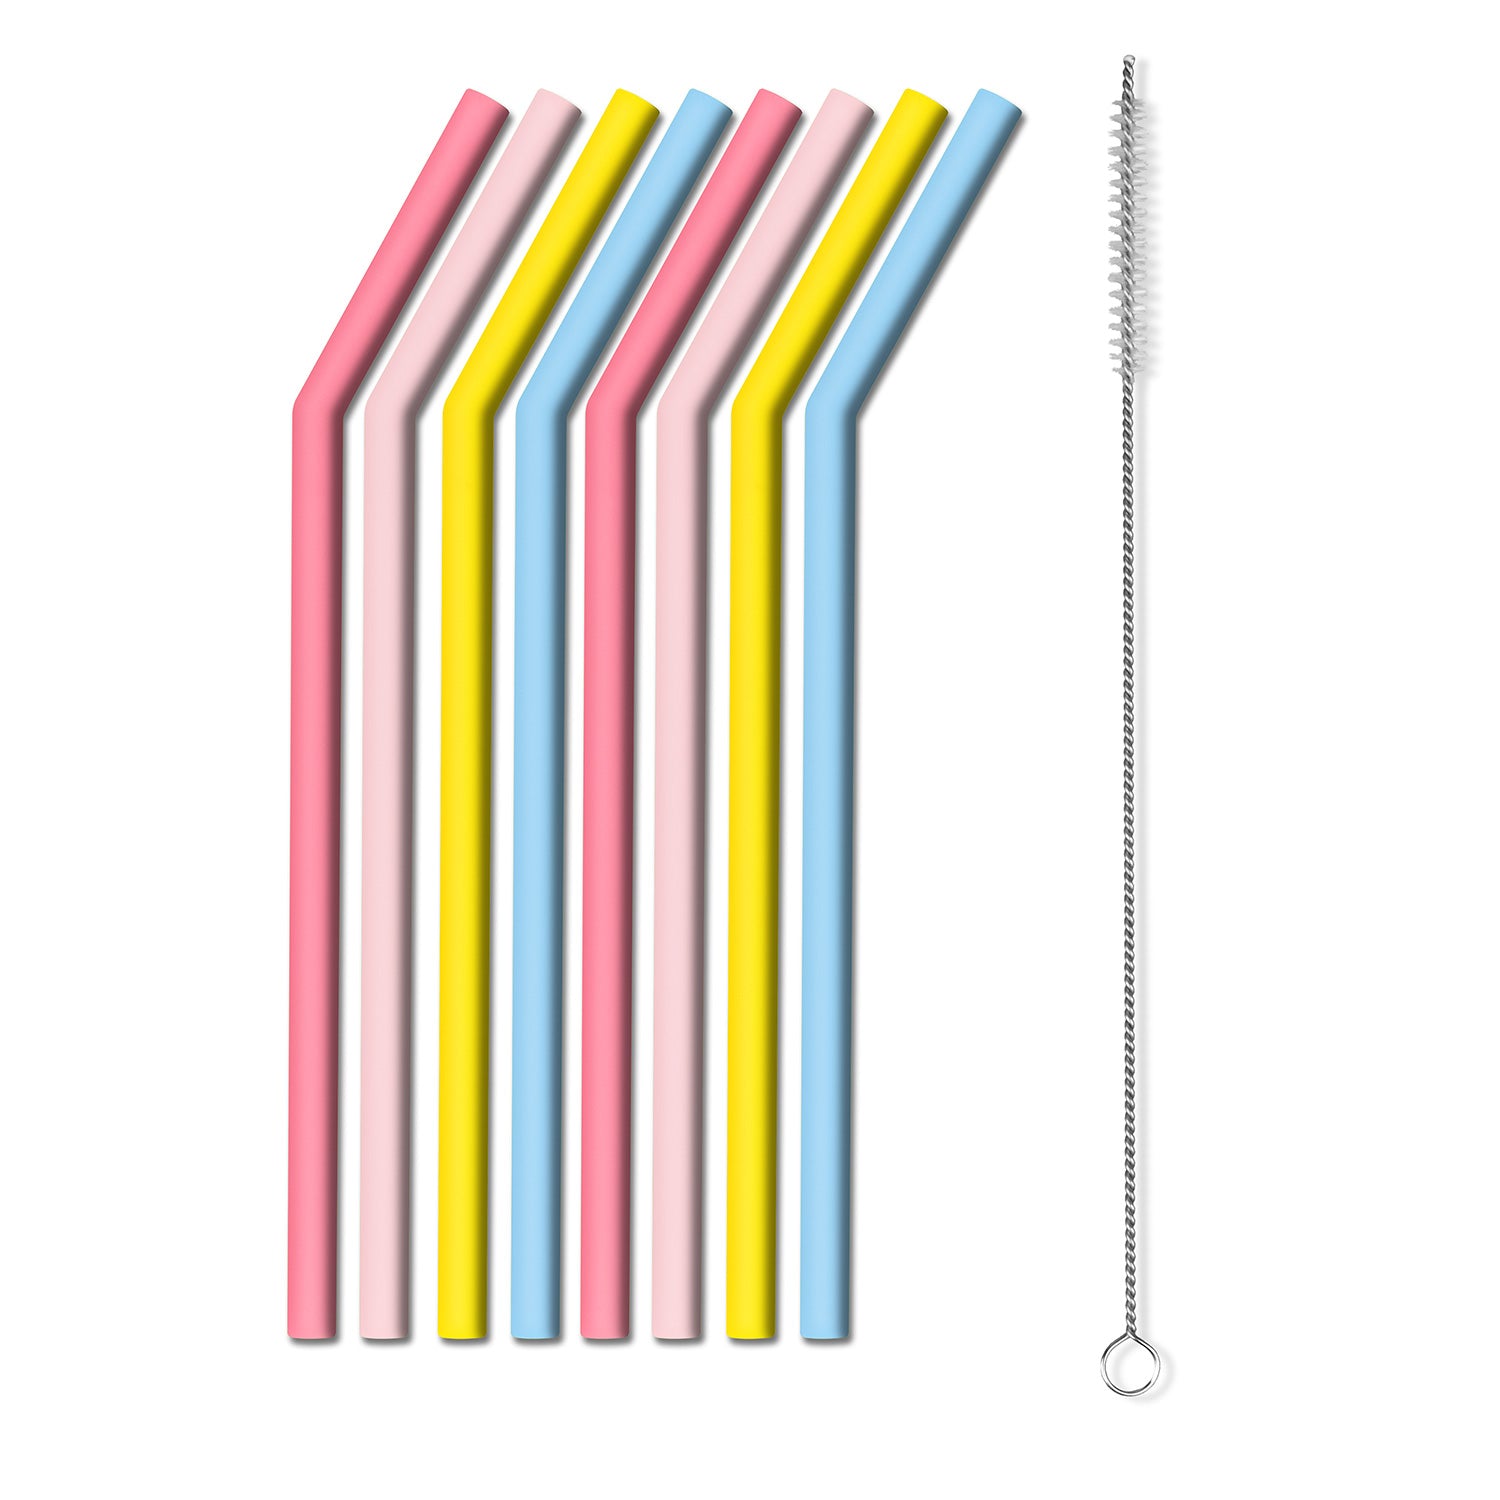 World of Confectioners - Reusable plastic drinking straws - 50 pcs - Brčka,  slámky - Tableware, Kitchen utensils